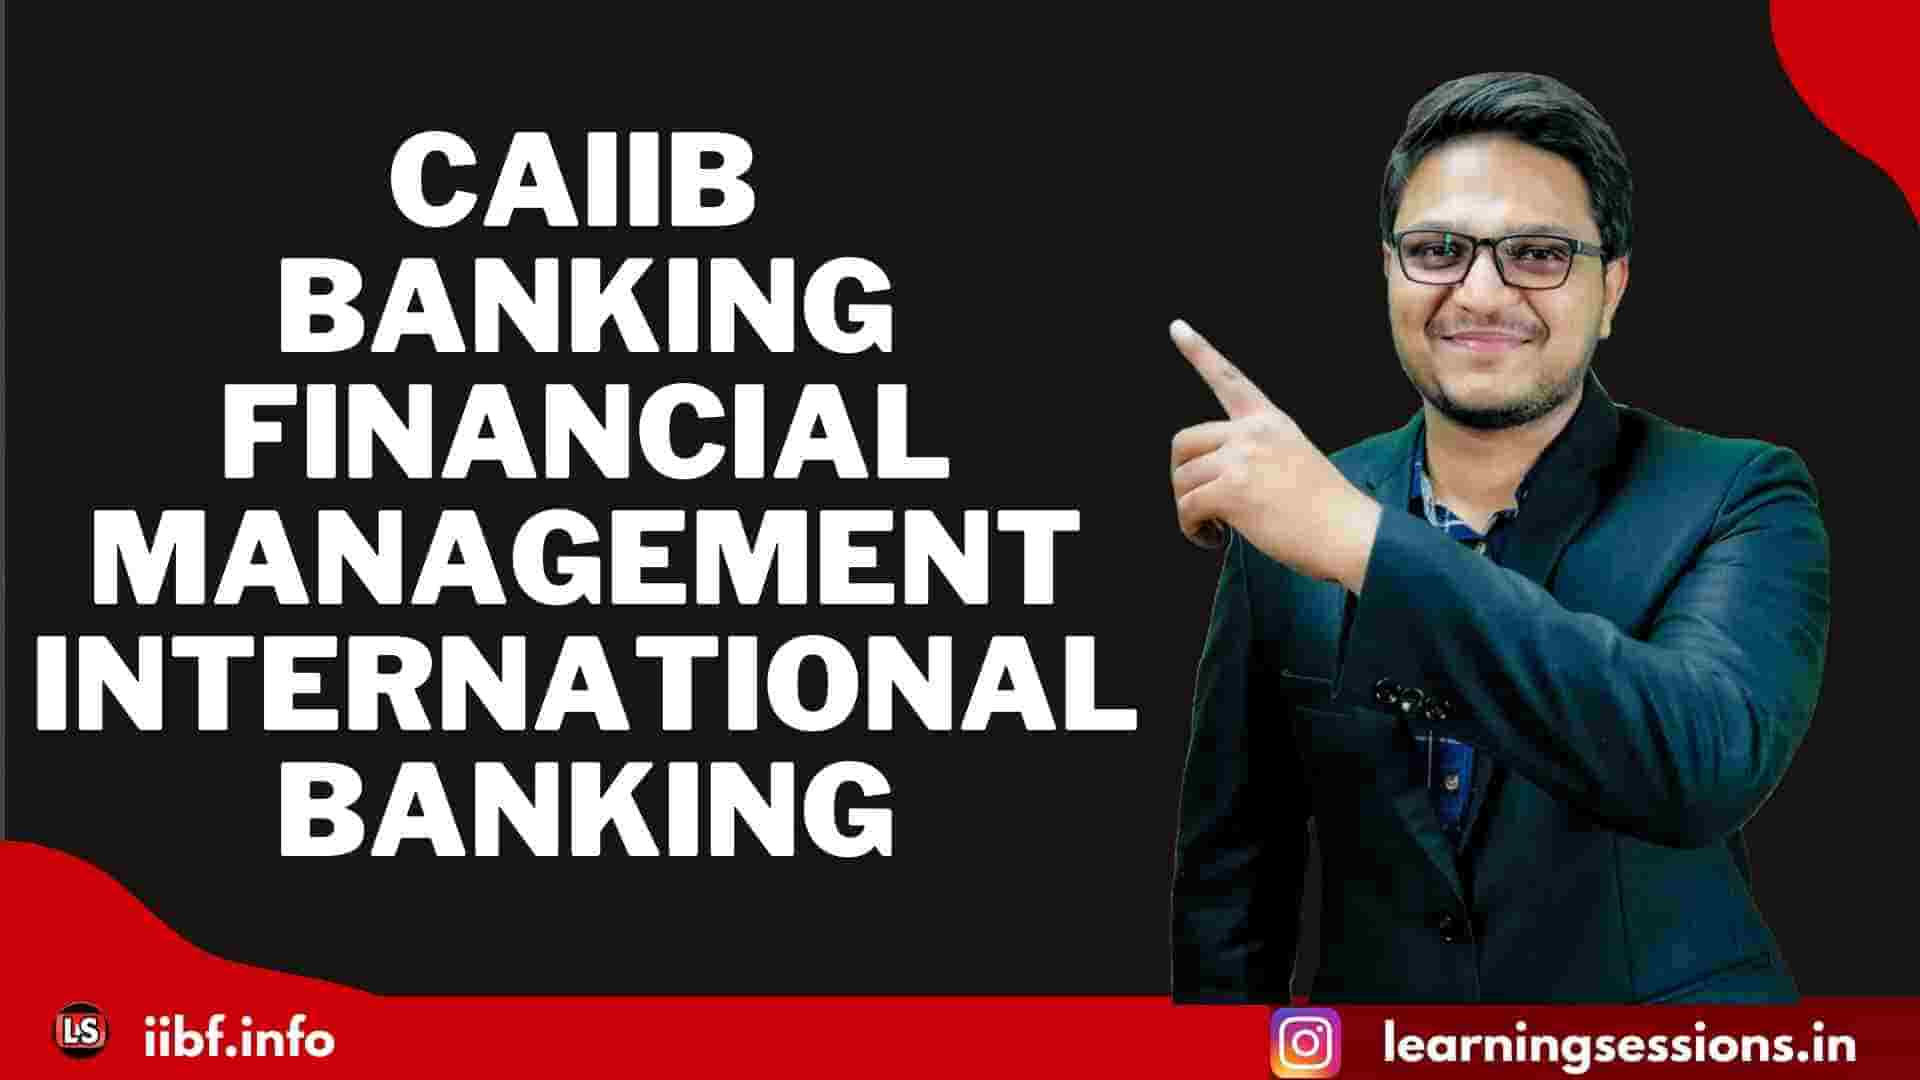 CAIIB BANKING FINANCIAL MANAGEMENT INTERNATIONAL BANKING